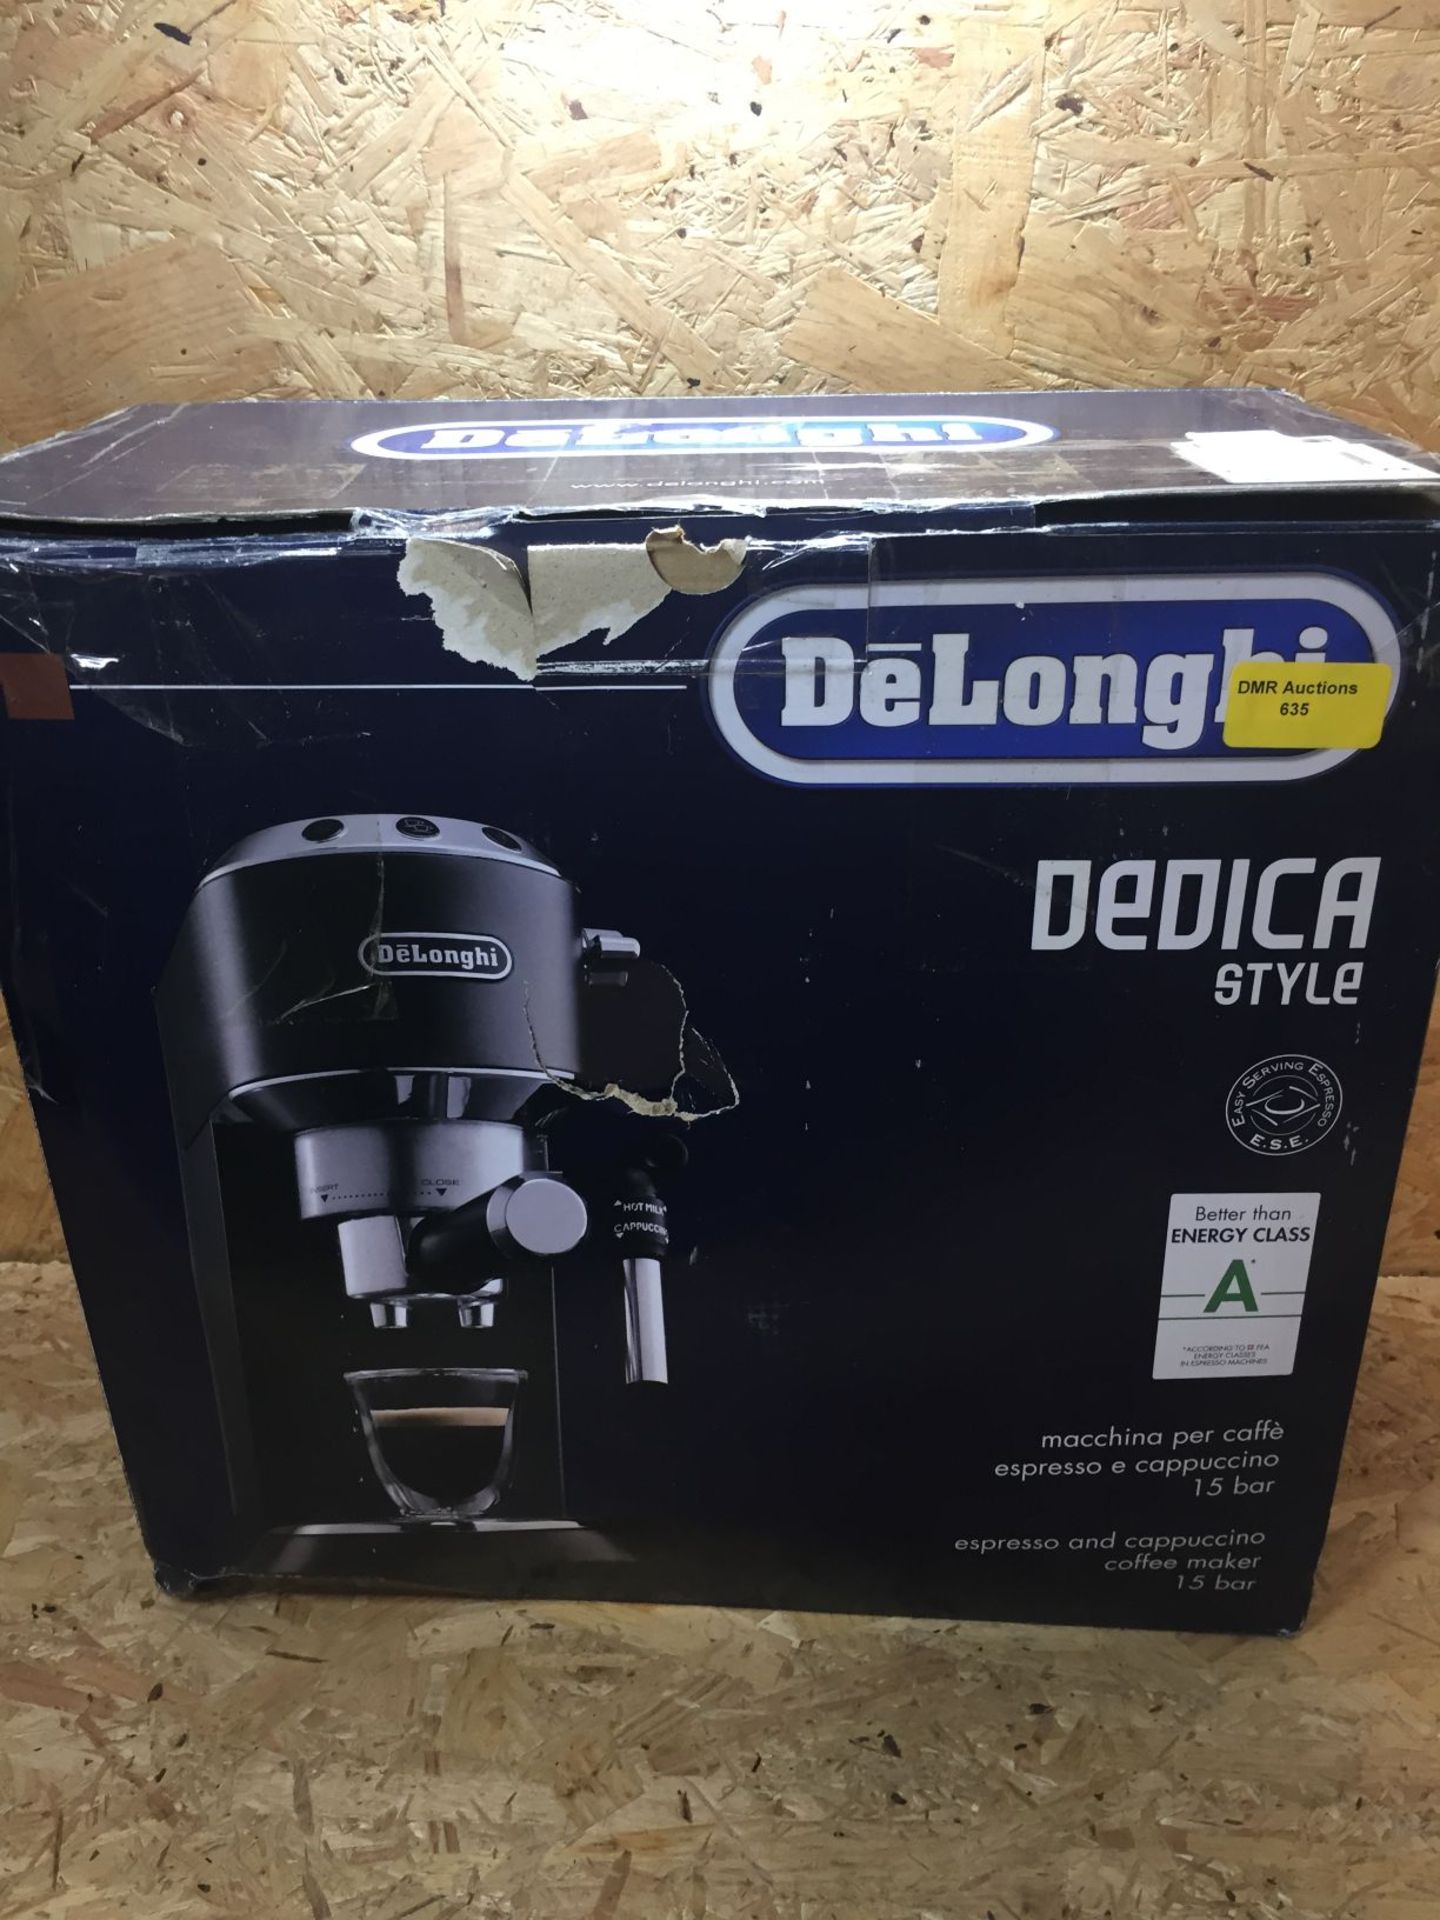 1 X DELONGHI DEDICA STYLE ESPRESSO/CAPPUCCINO COFFEE MAKER EC685BK / RRP £182.00